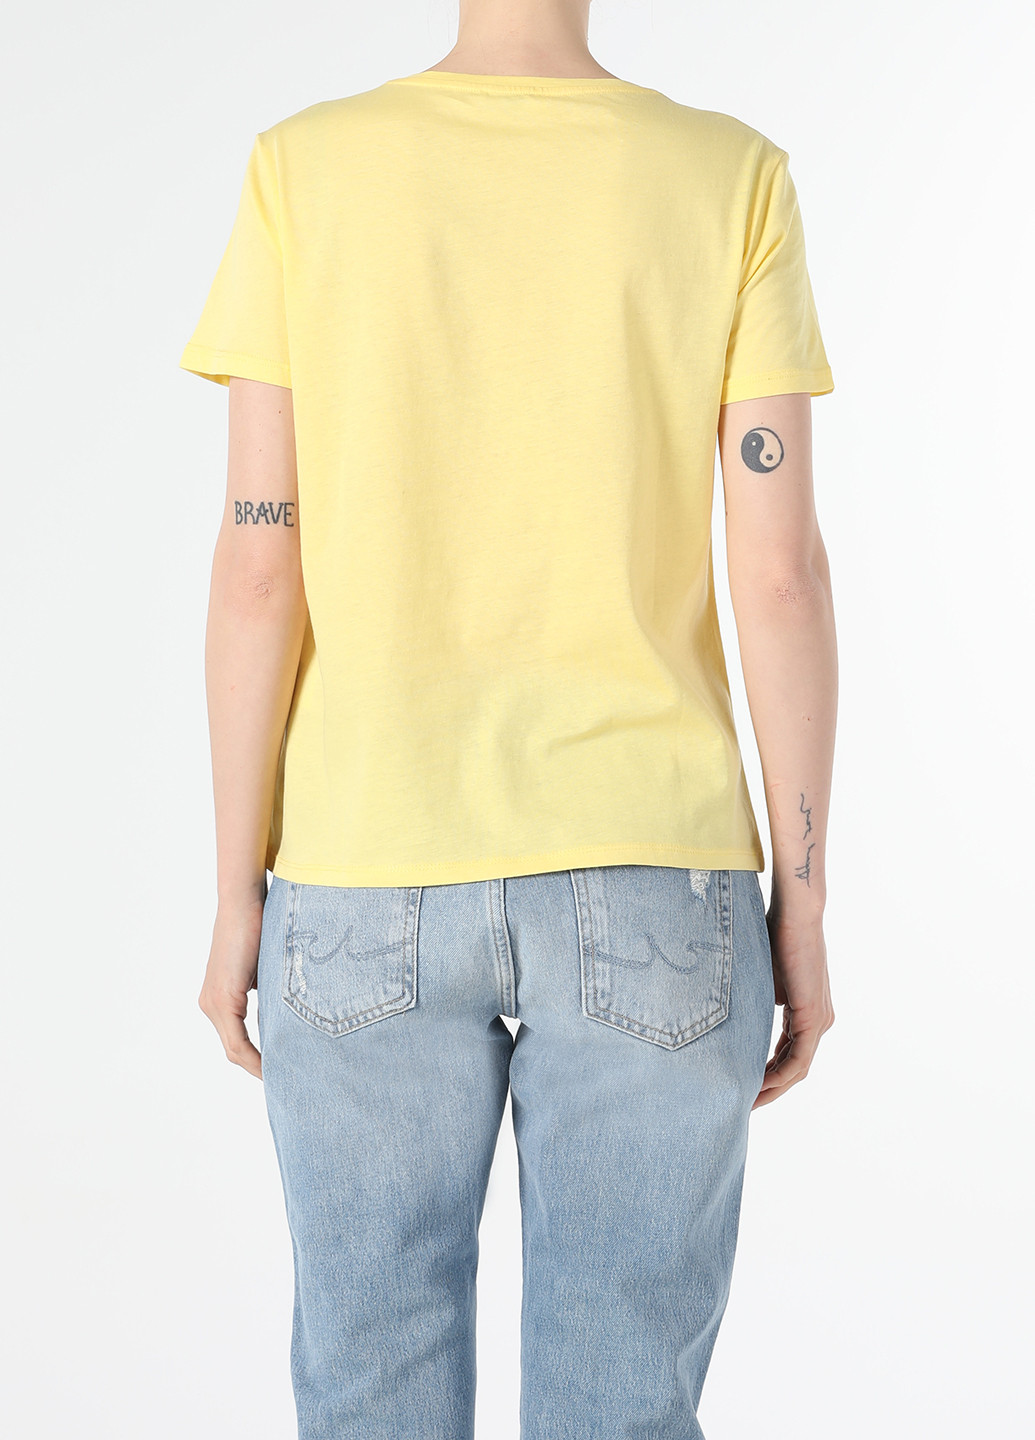 Желтая летняя футболка Colin's